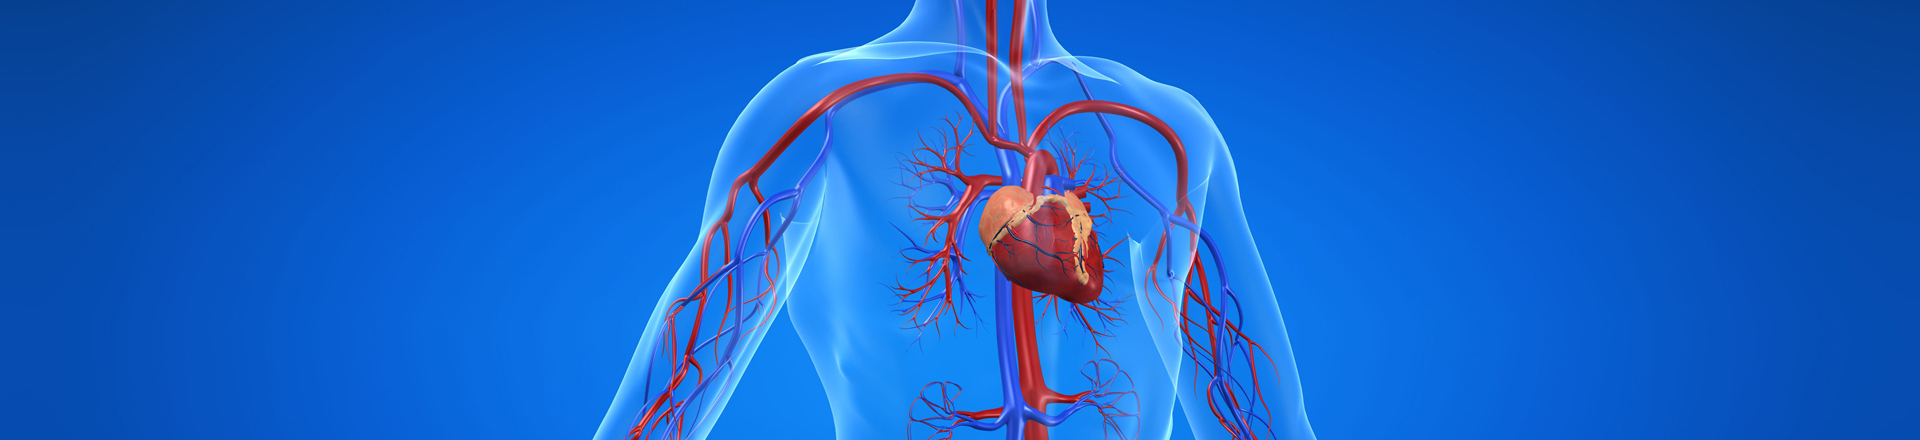 Cardiovascular system (cardiovascular, disease, heart)